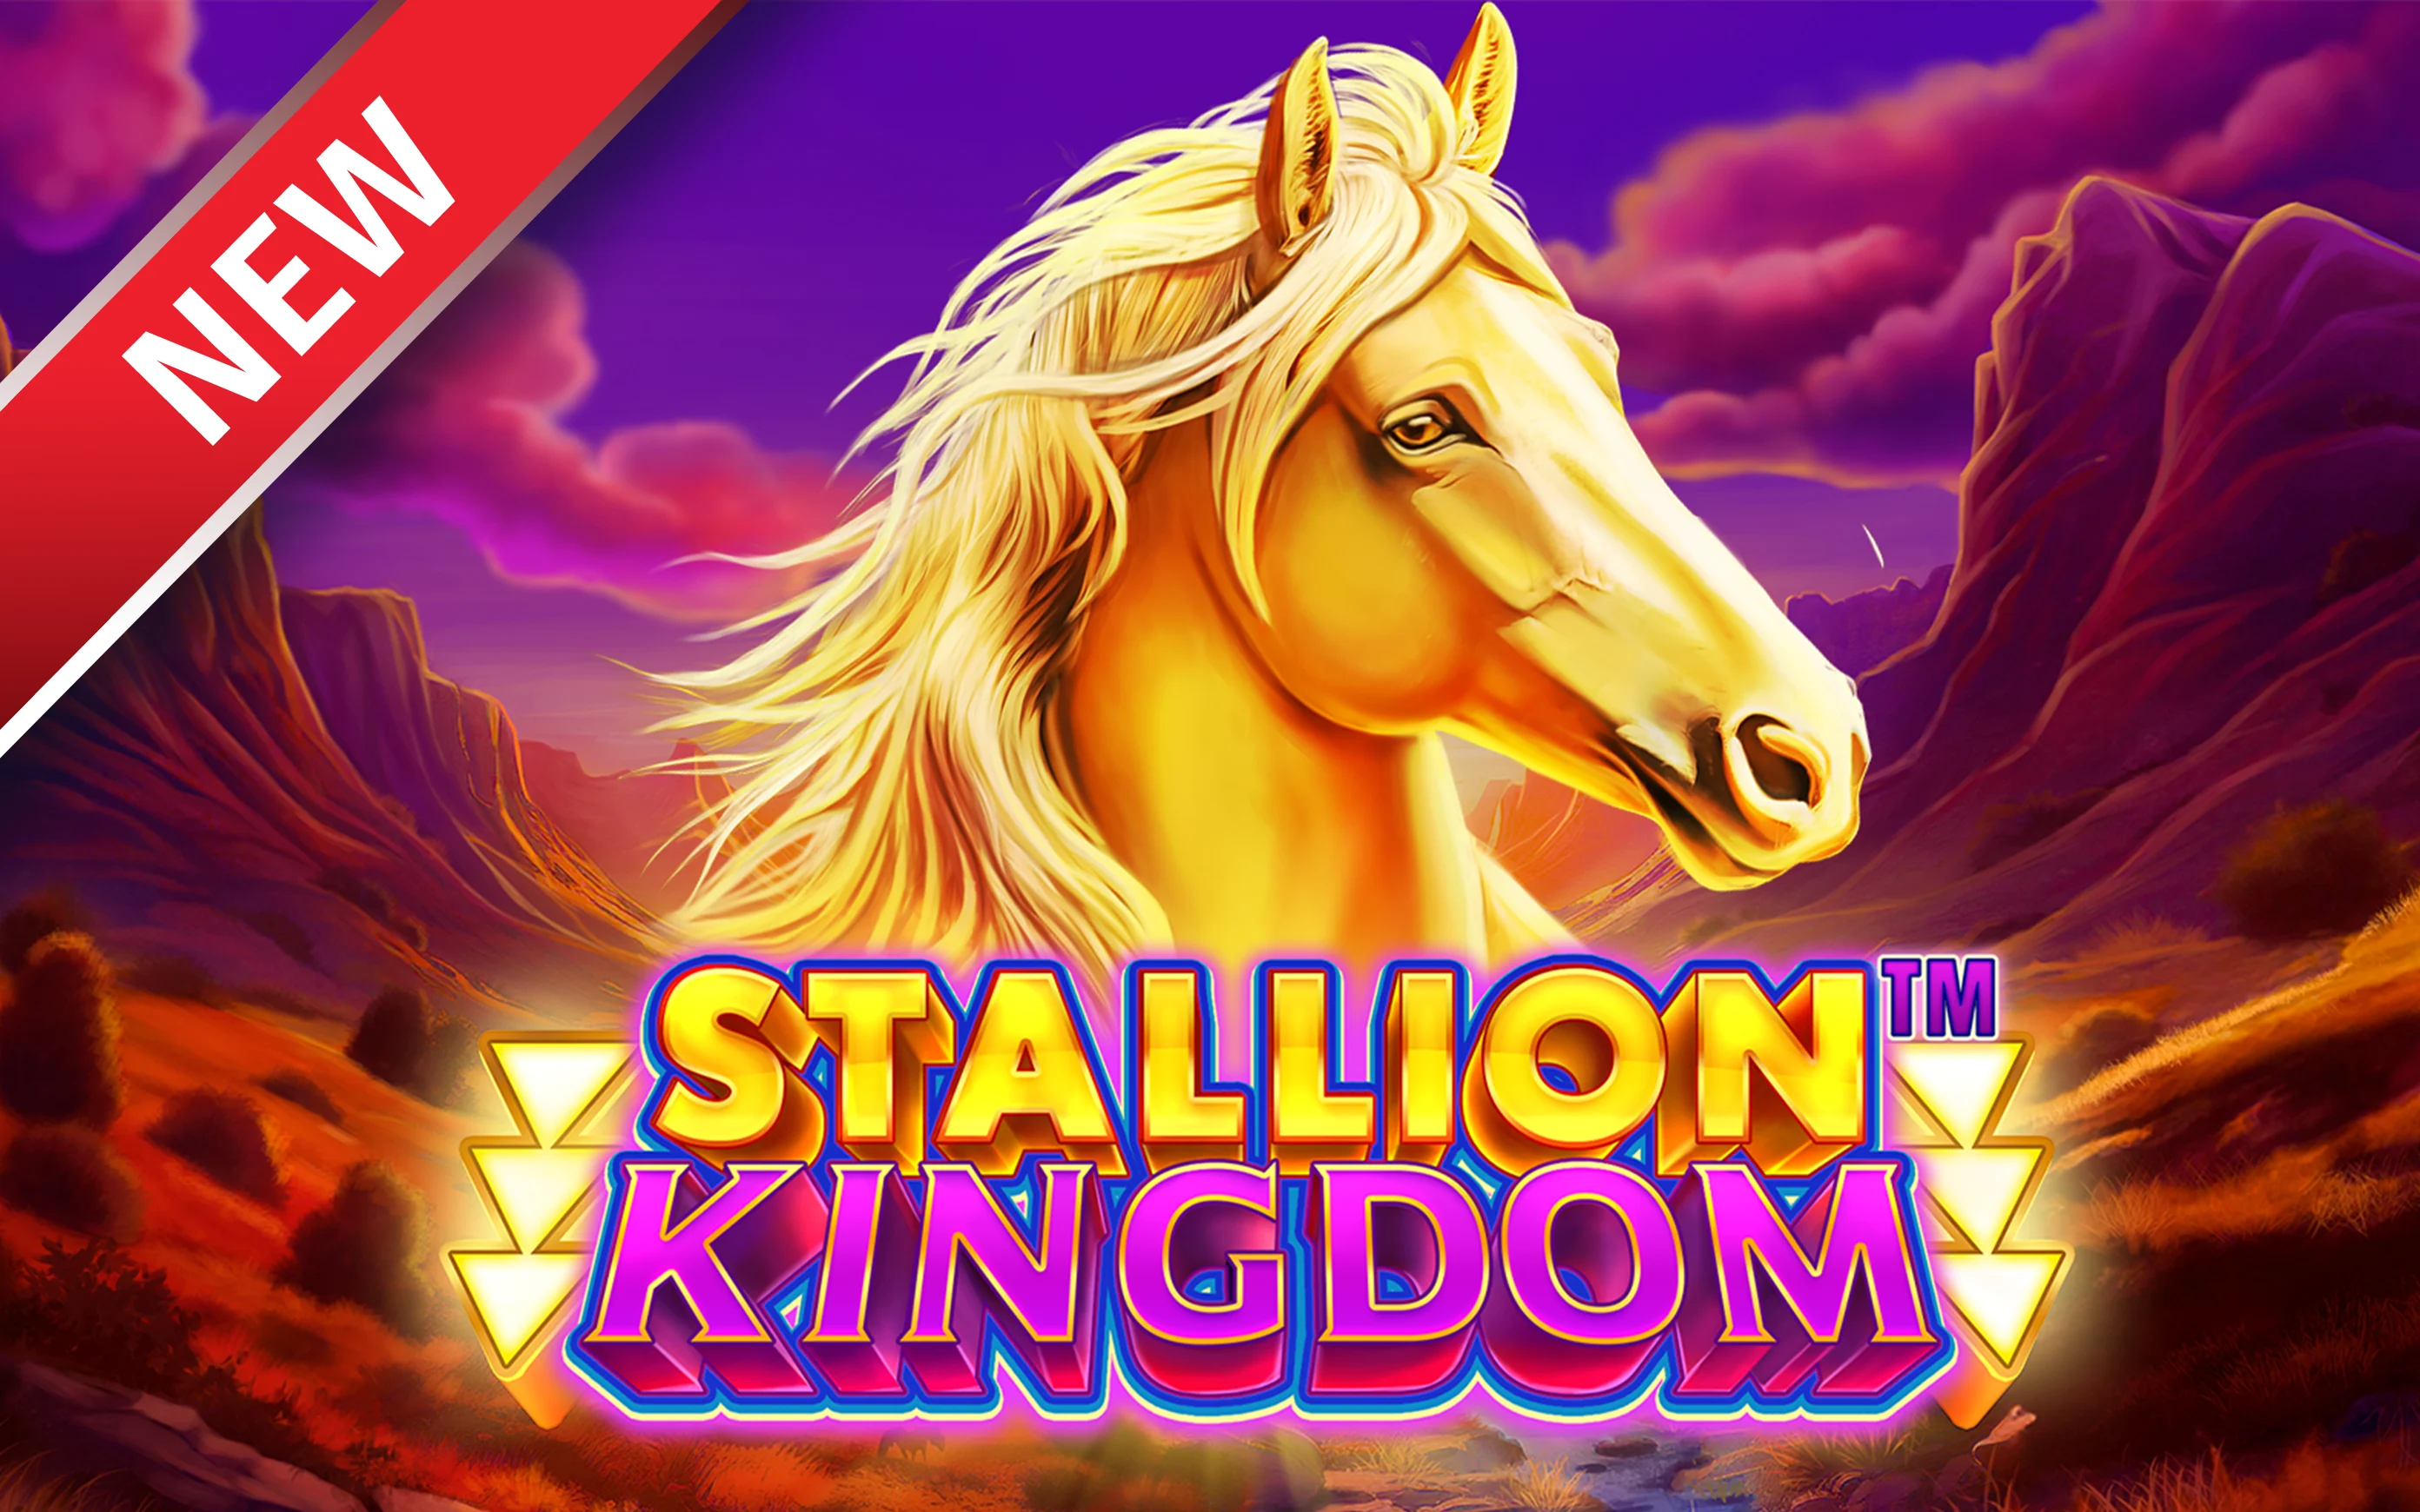 Play Stallion Kingdom™ on Starcasino.be online casino